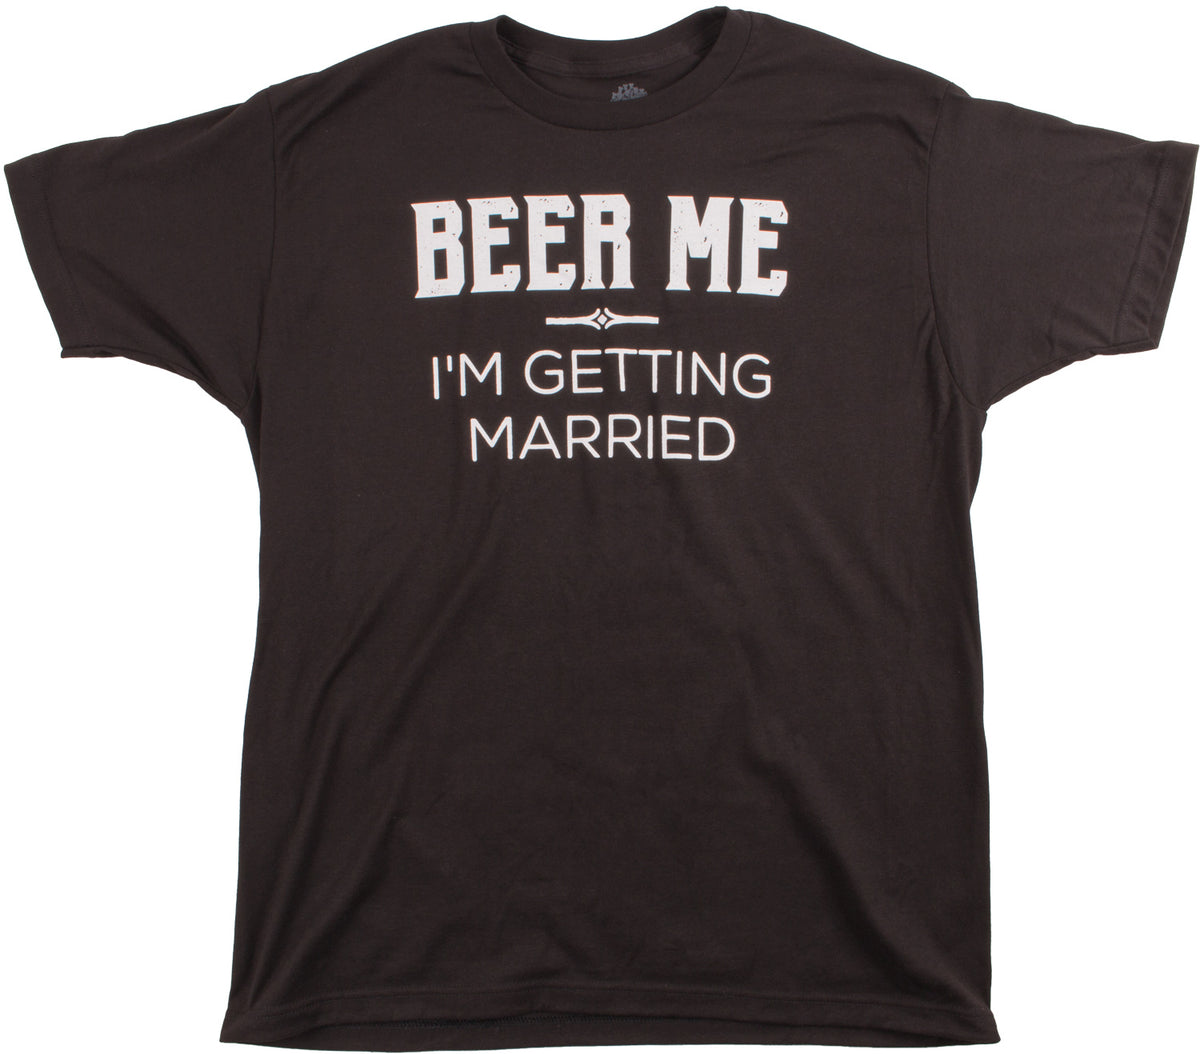 Beer Me, I'm Getting Married / Groom Groomsmen Funny Bachelor Party Joke T-shirt